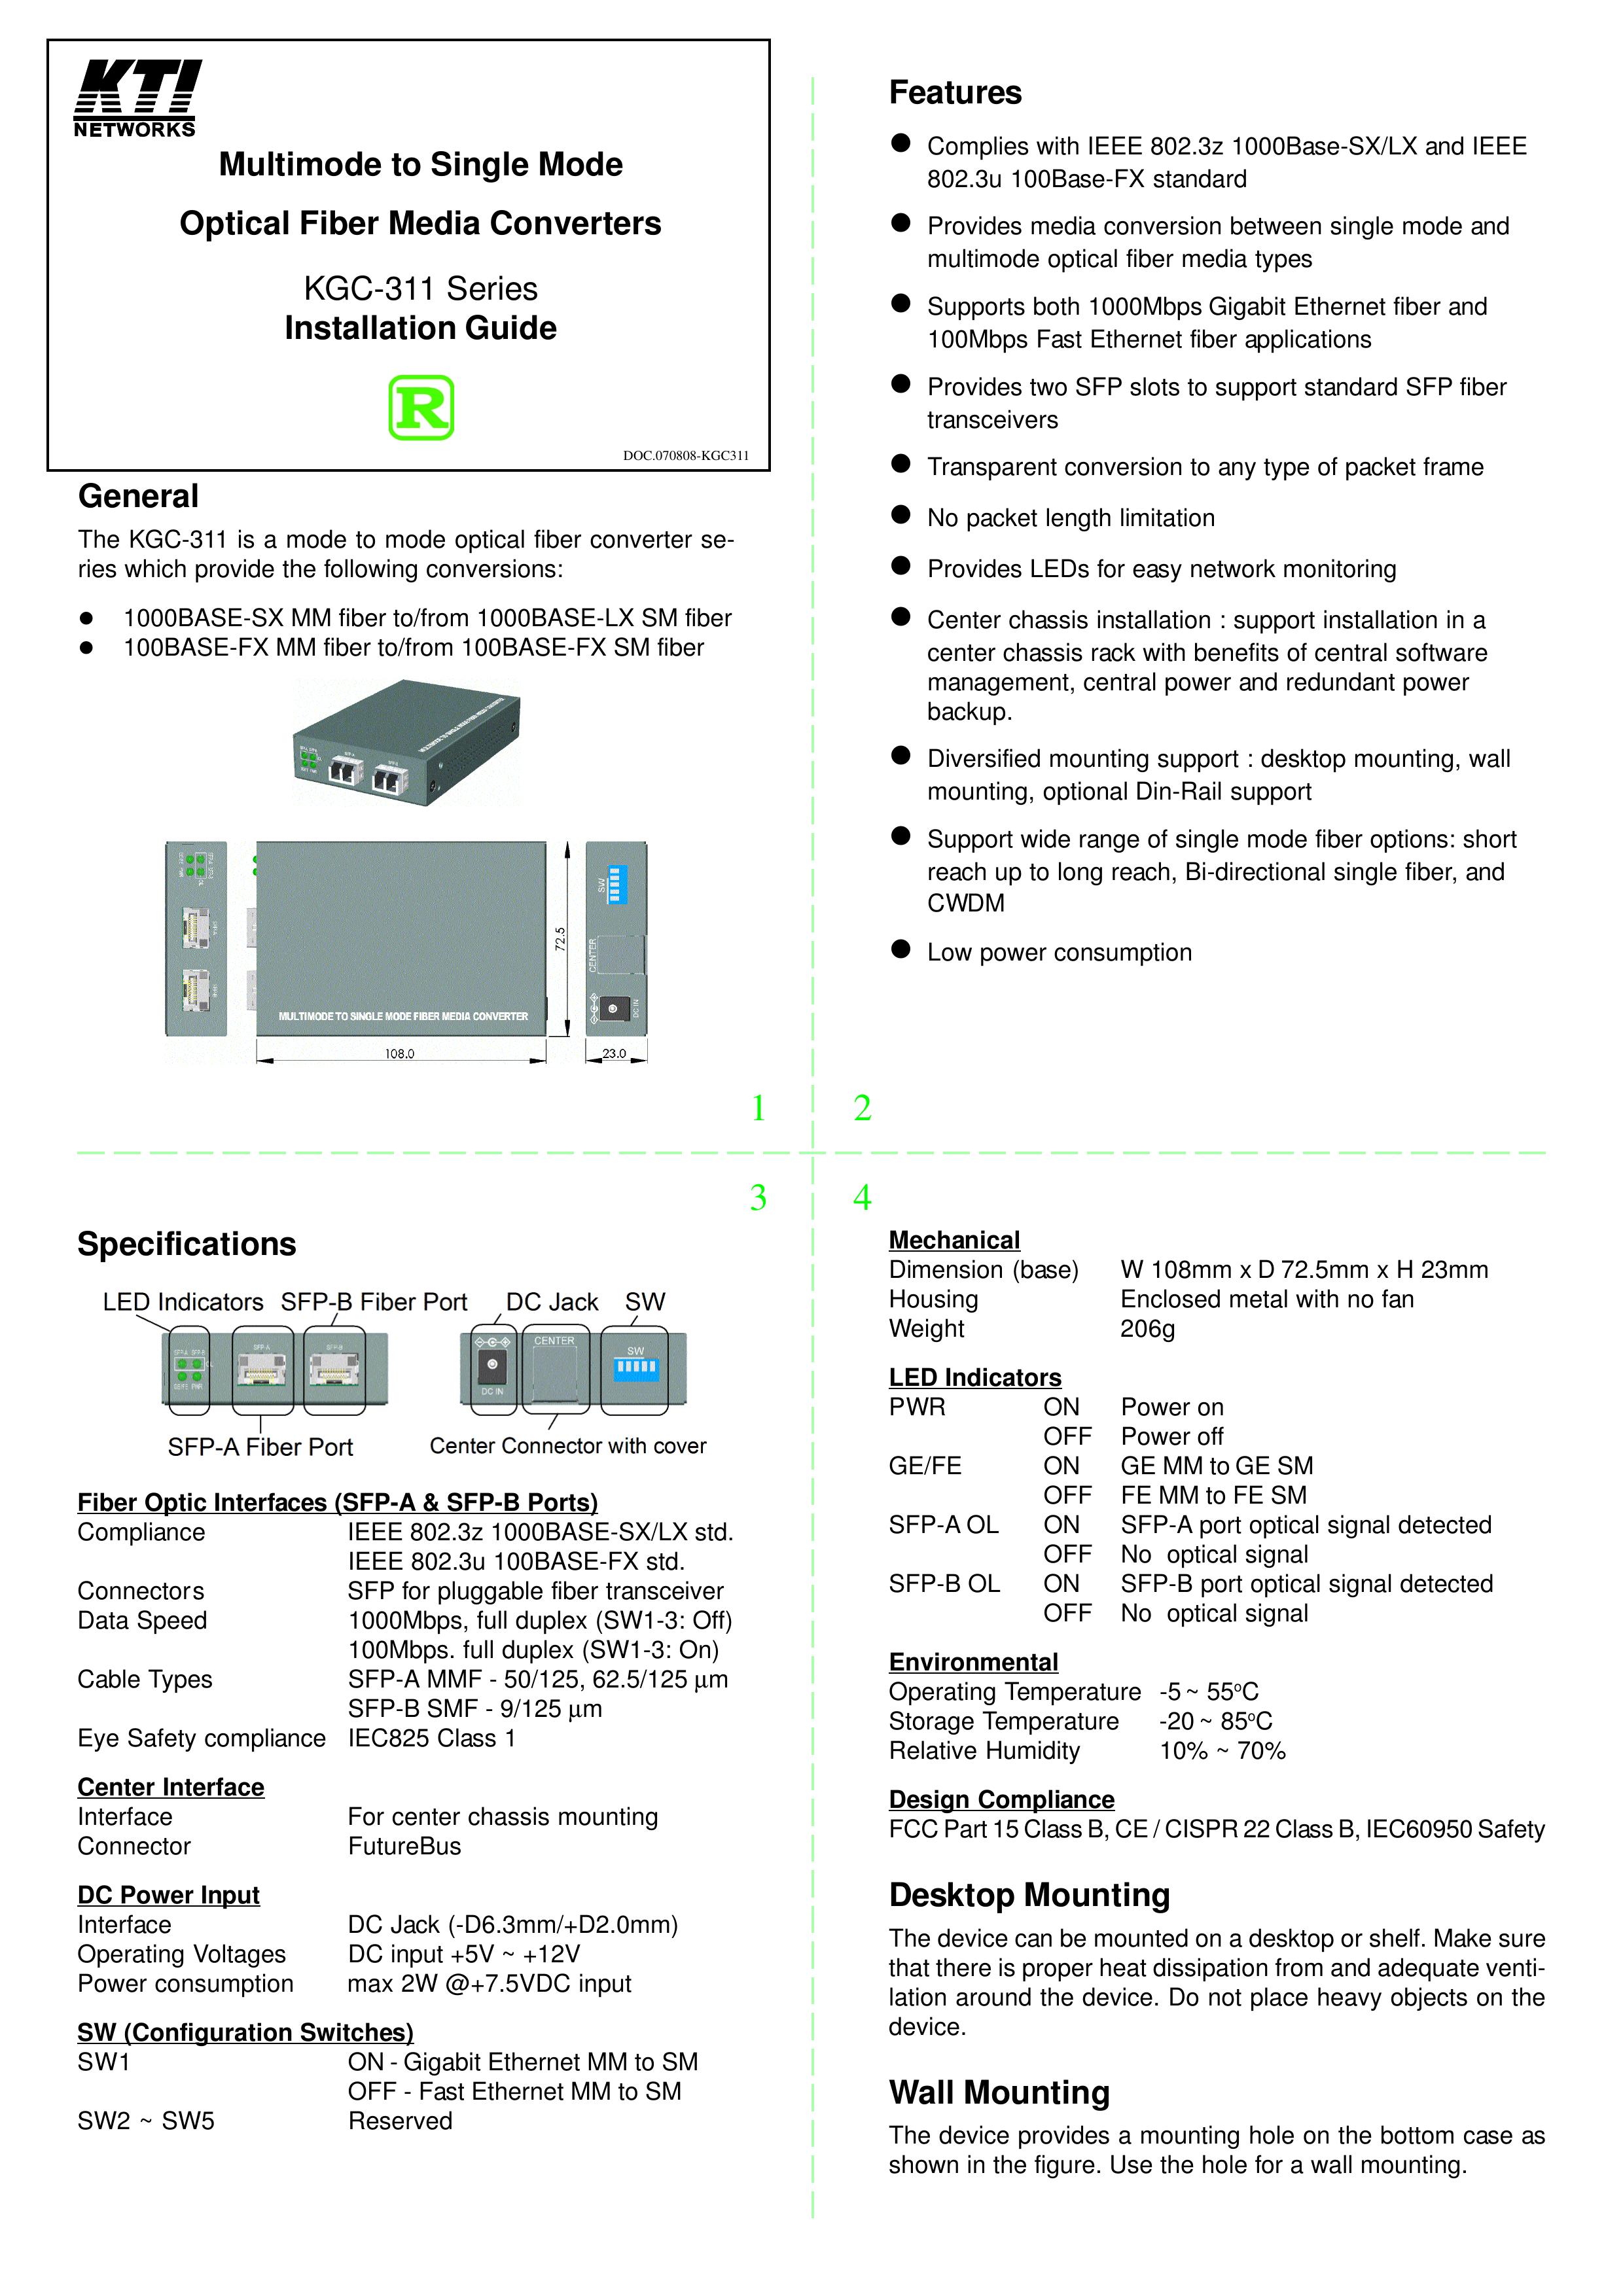 KTI Networks Multimode to Single Mode Optical Fiber Media Converter Multi-tool User Manual